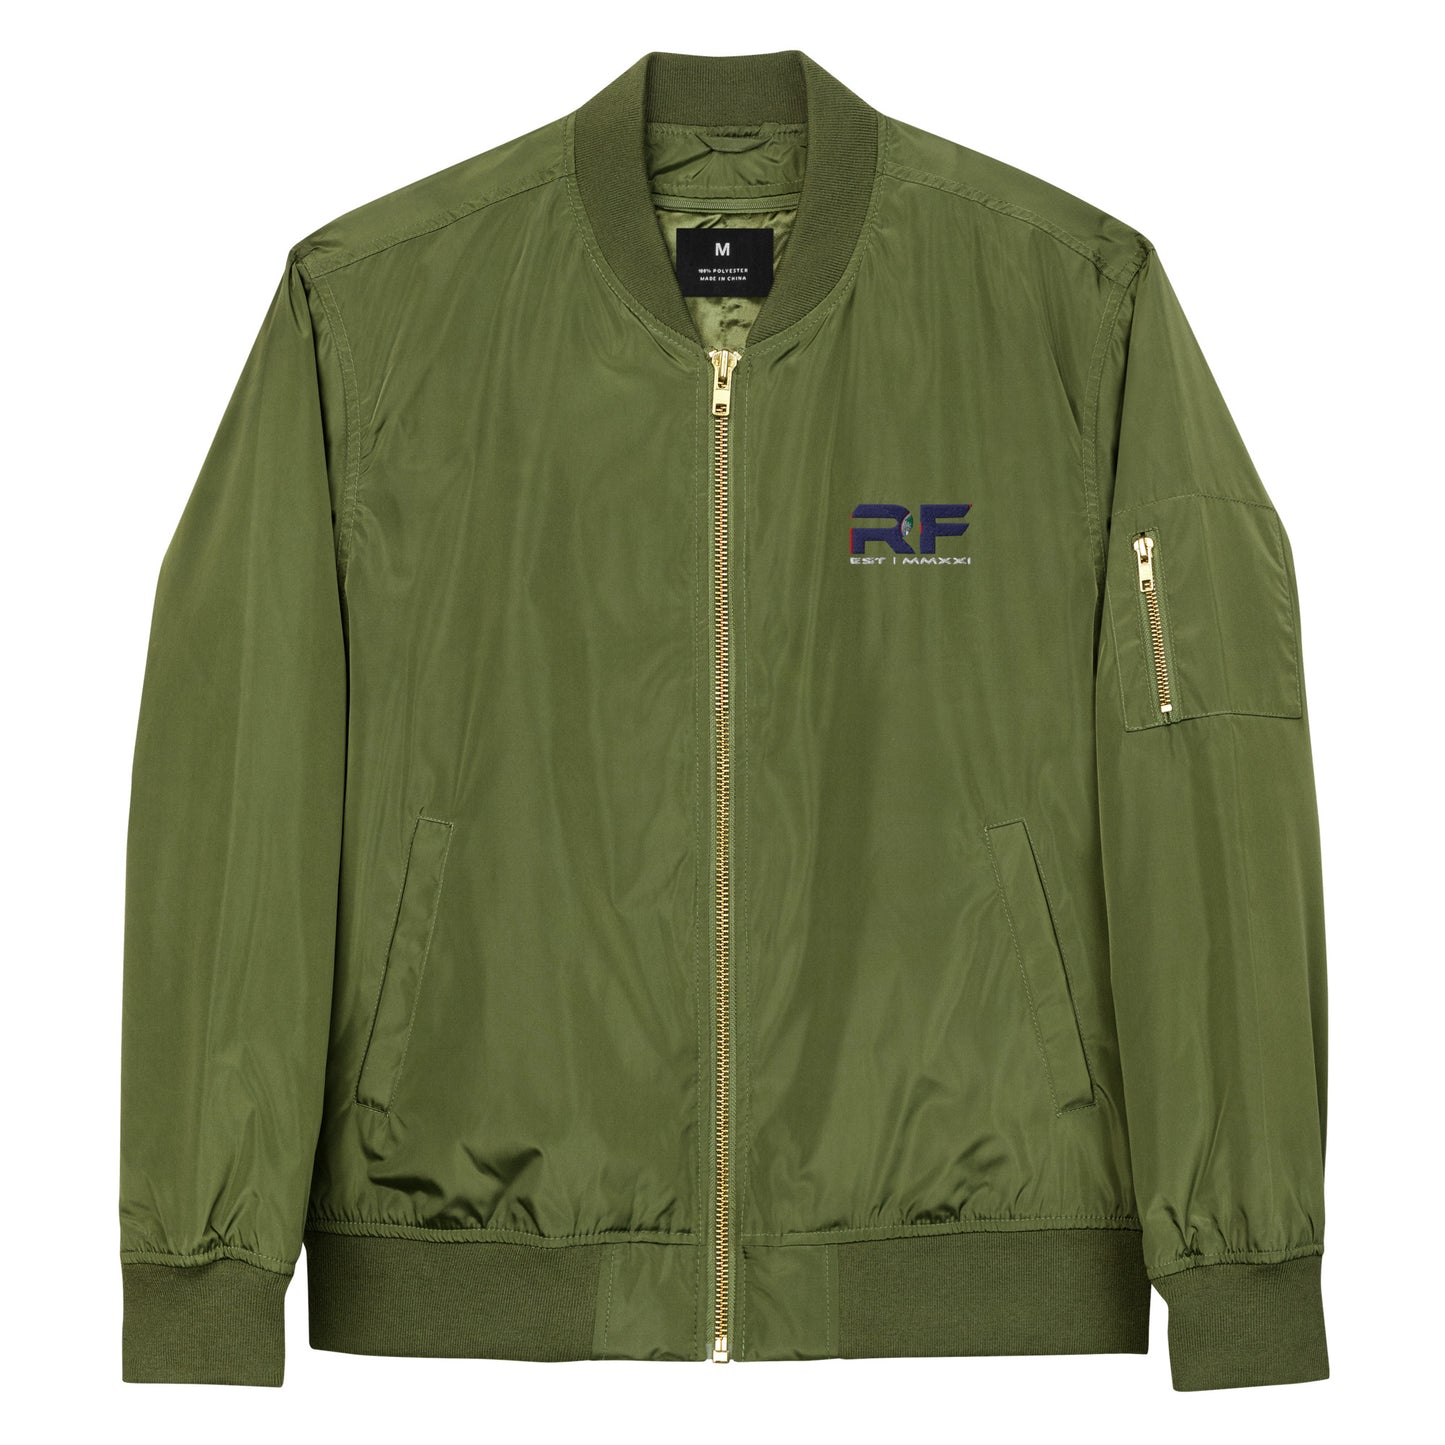 RF Guamanian bomber jacket